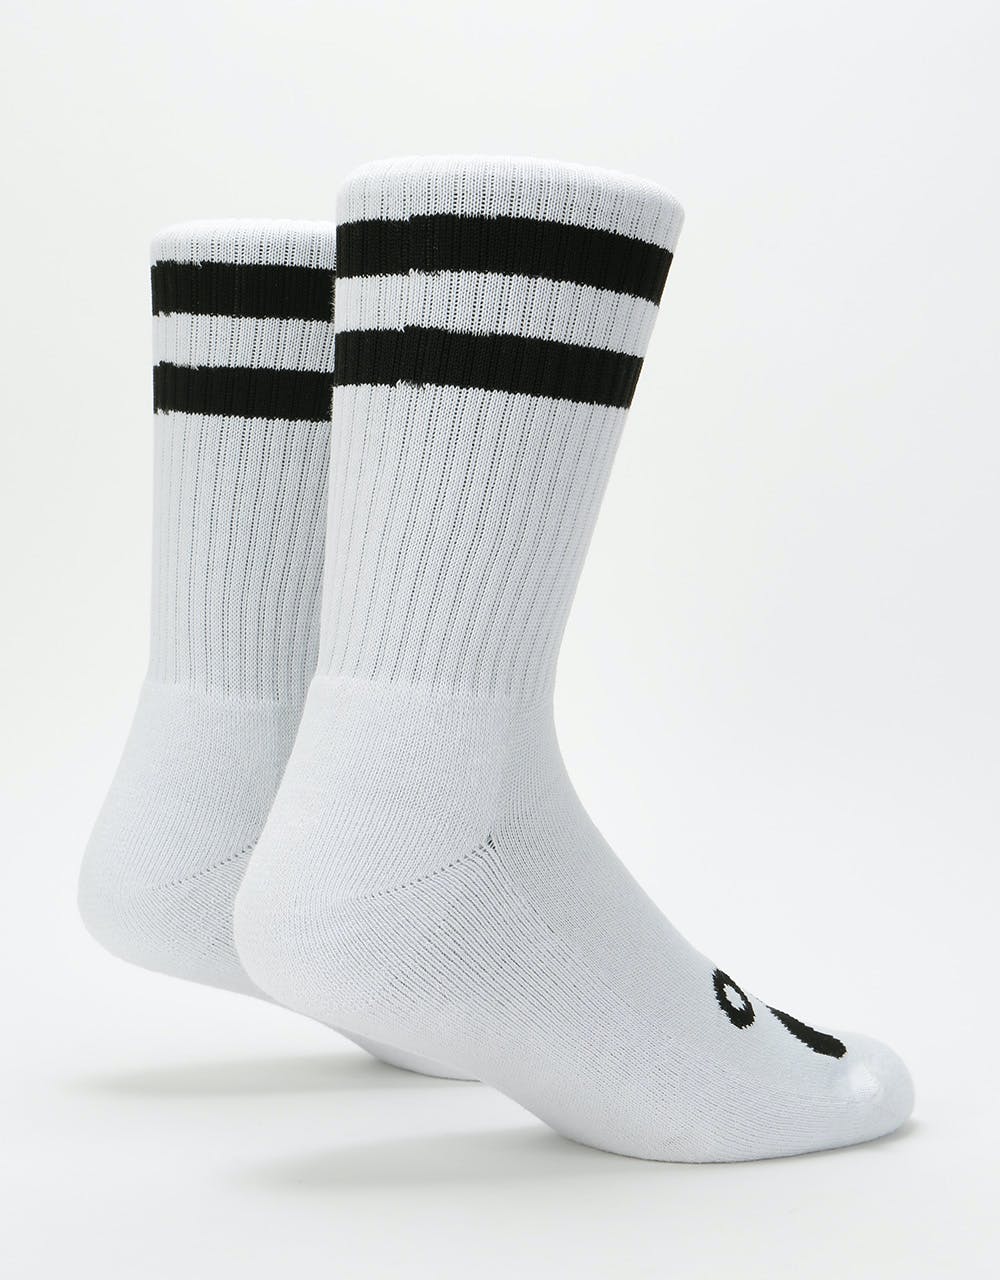 Polar Happy Sad Socks - White